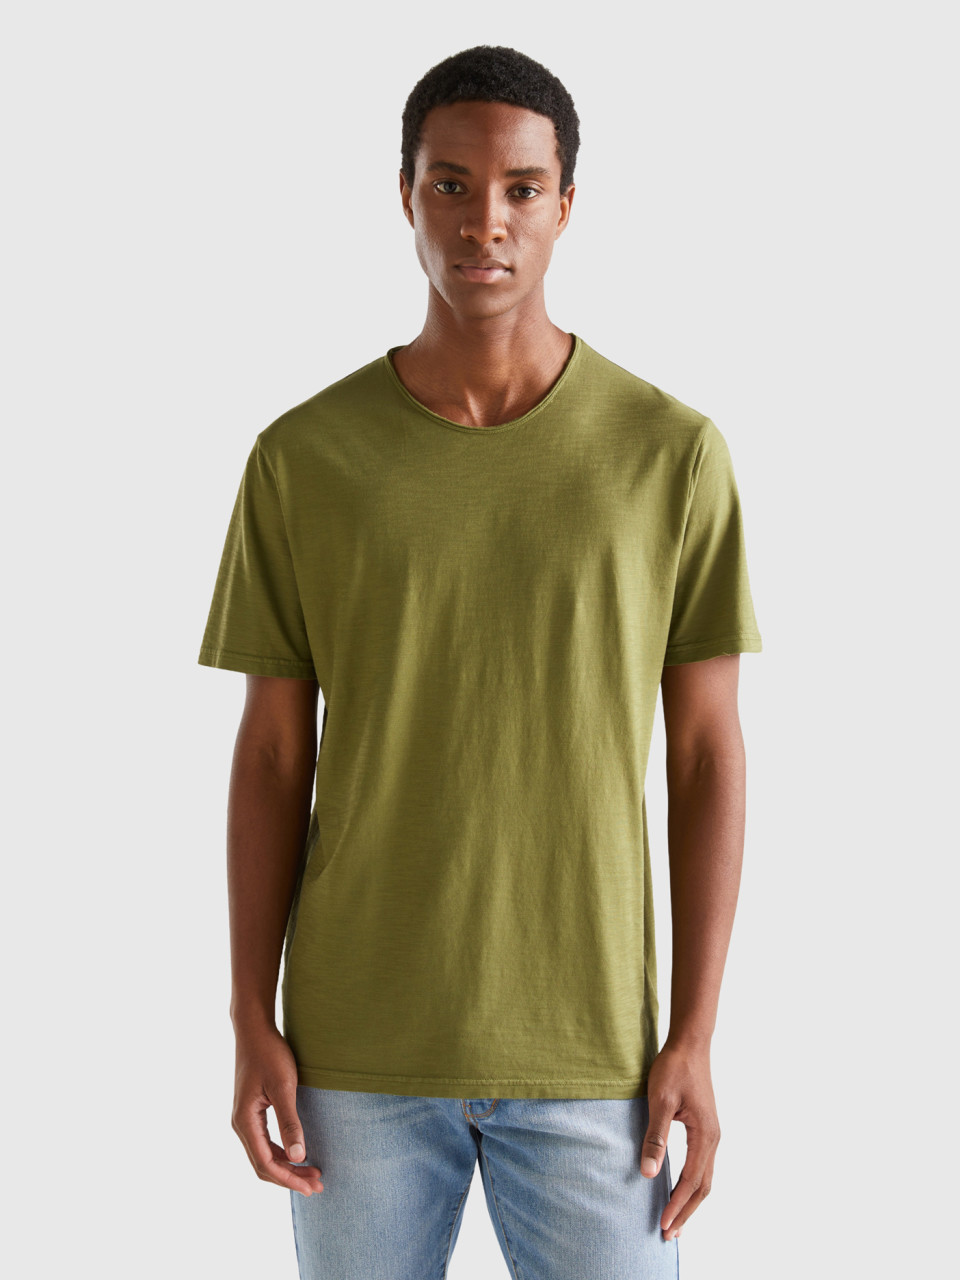 Benetton, Military Green T-shirt In Slub Cotton, Military Green, Men